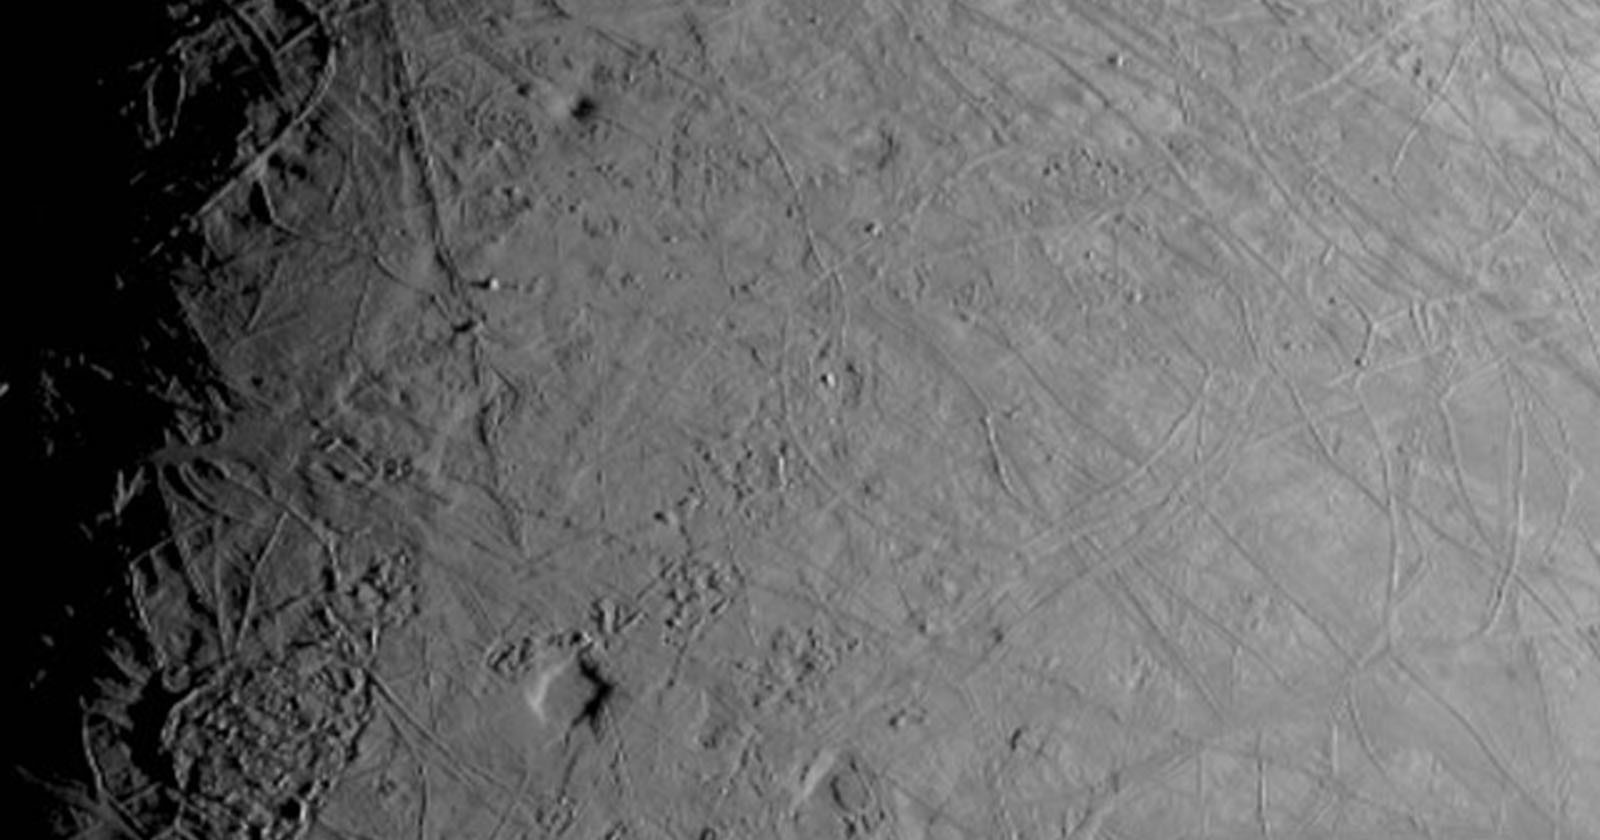  close-up jupiter frozen ocean moon could harbor 